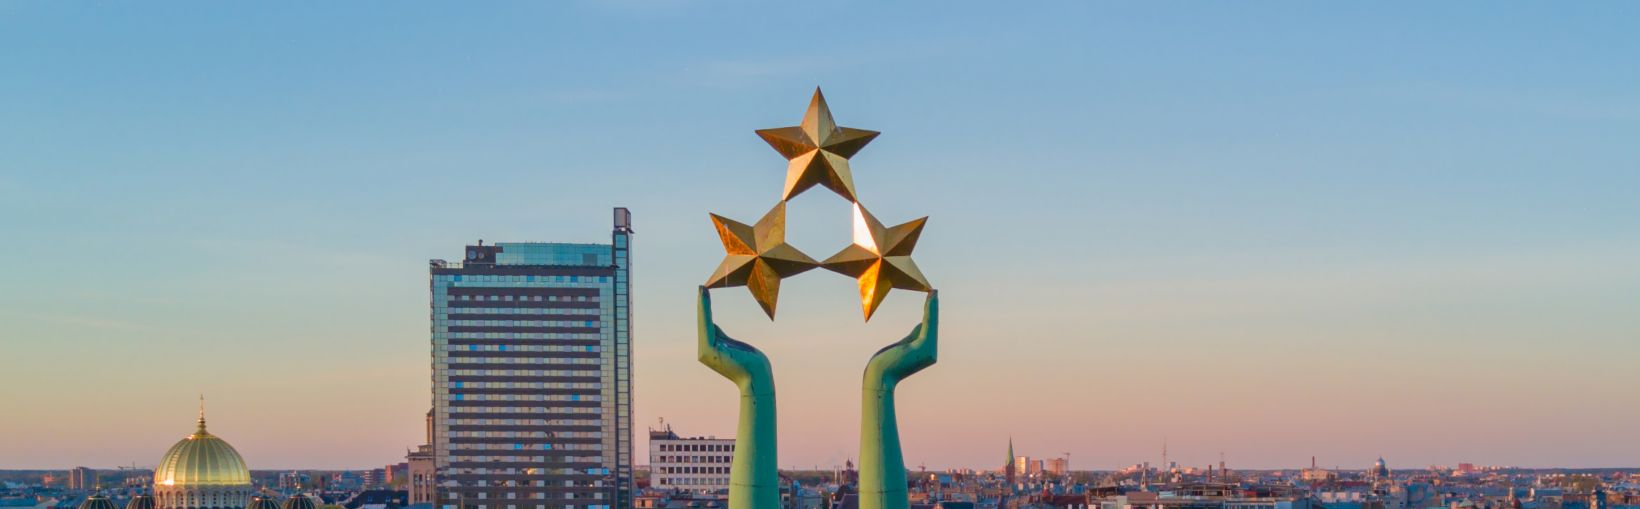 Bonita puesta de sol en Riga junto al Monumento a la Libertad, Milda. Libertad en Letonia. Estatua a la libertad que sujeta tres estrellas sobre la ciudad.